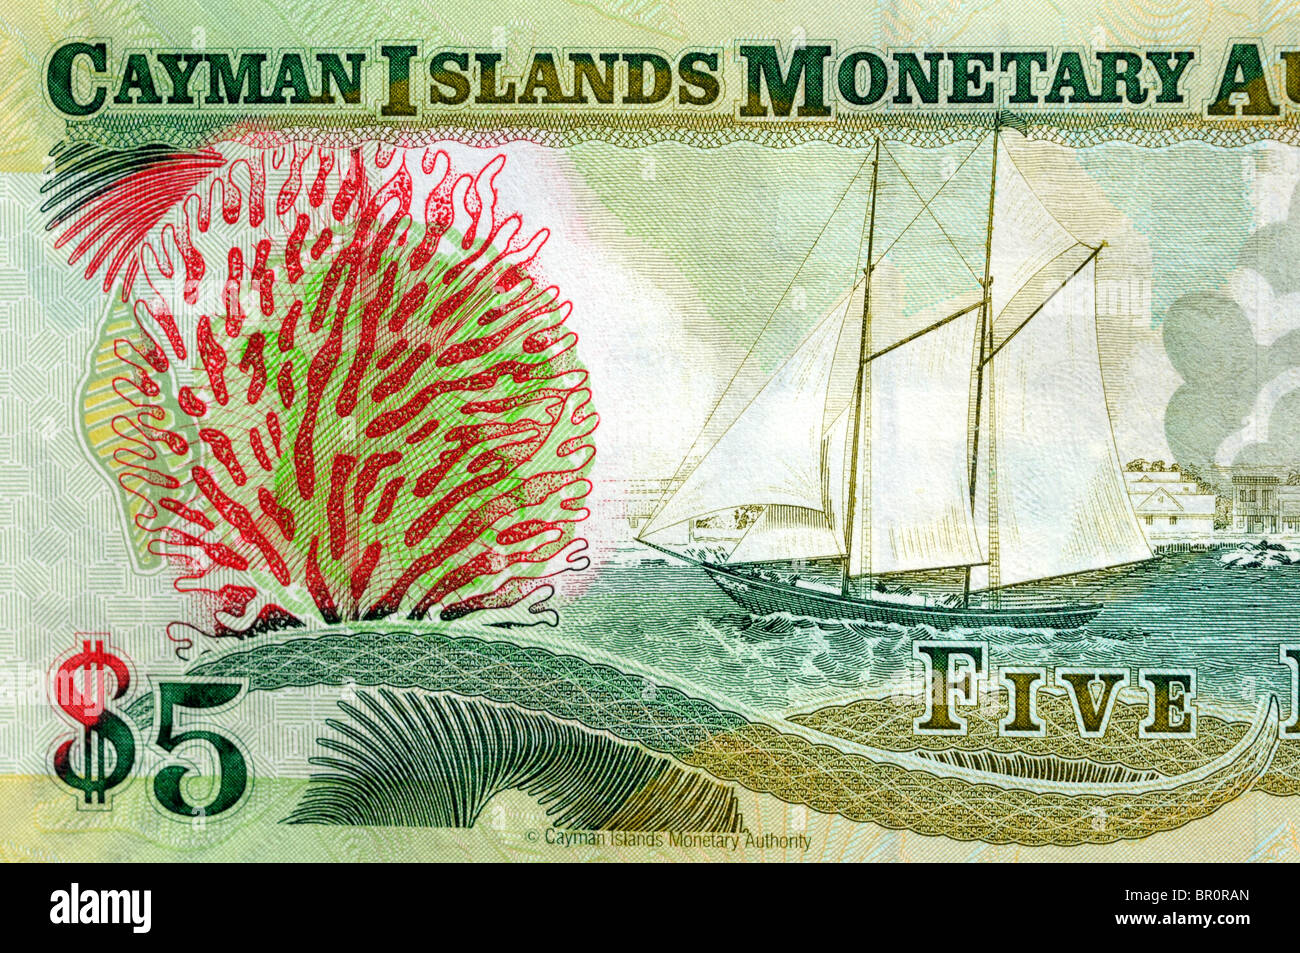 Cayman Islands Five 5 Dollar Bank Note. Stock Photo